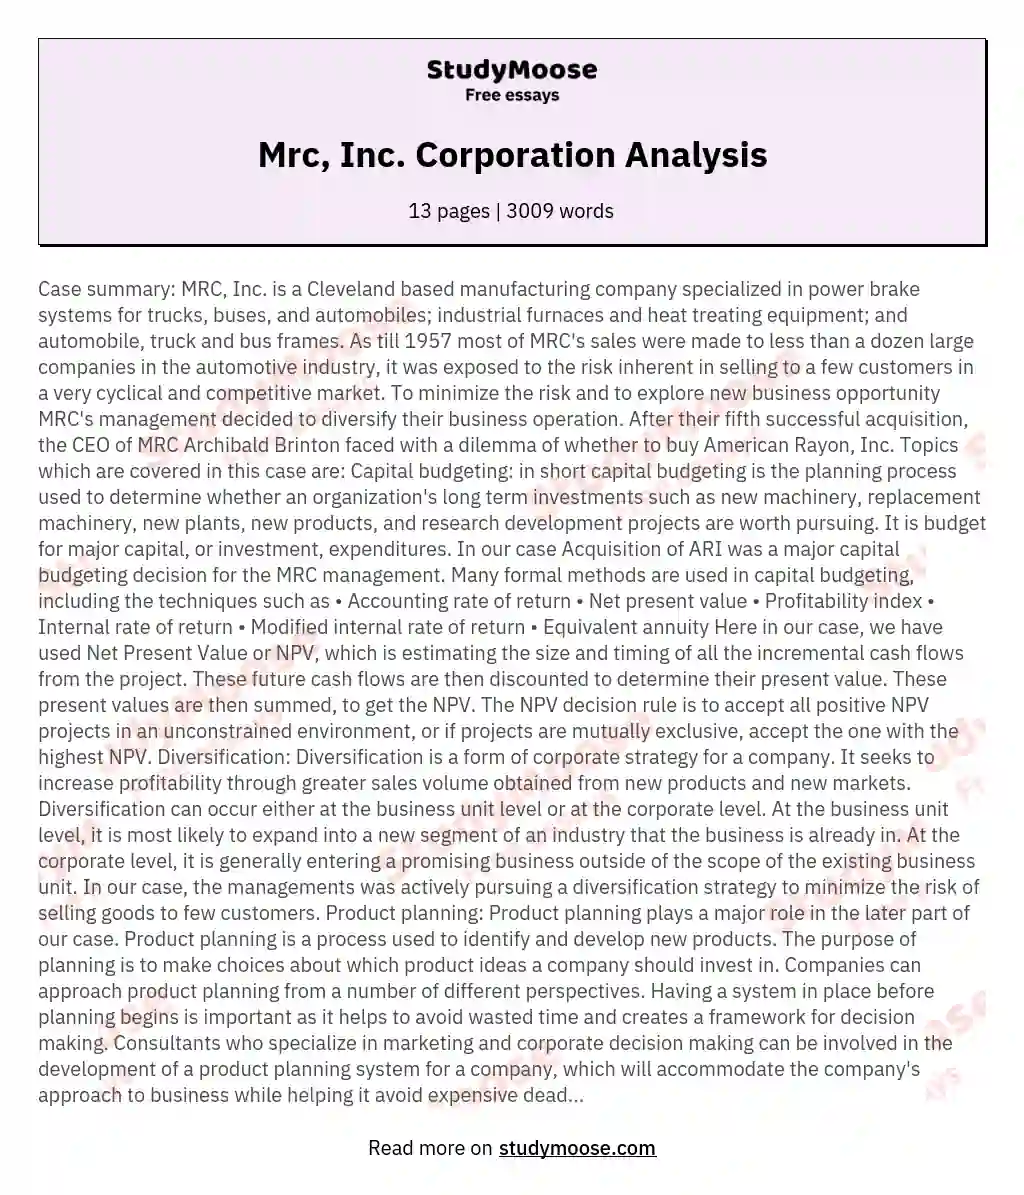 Mrc, Inc. Corporation Analysis essay